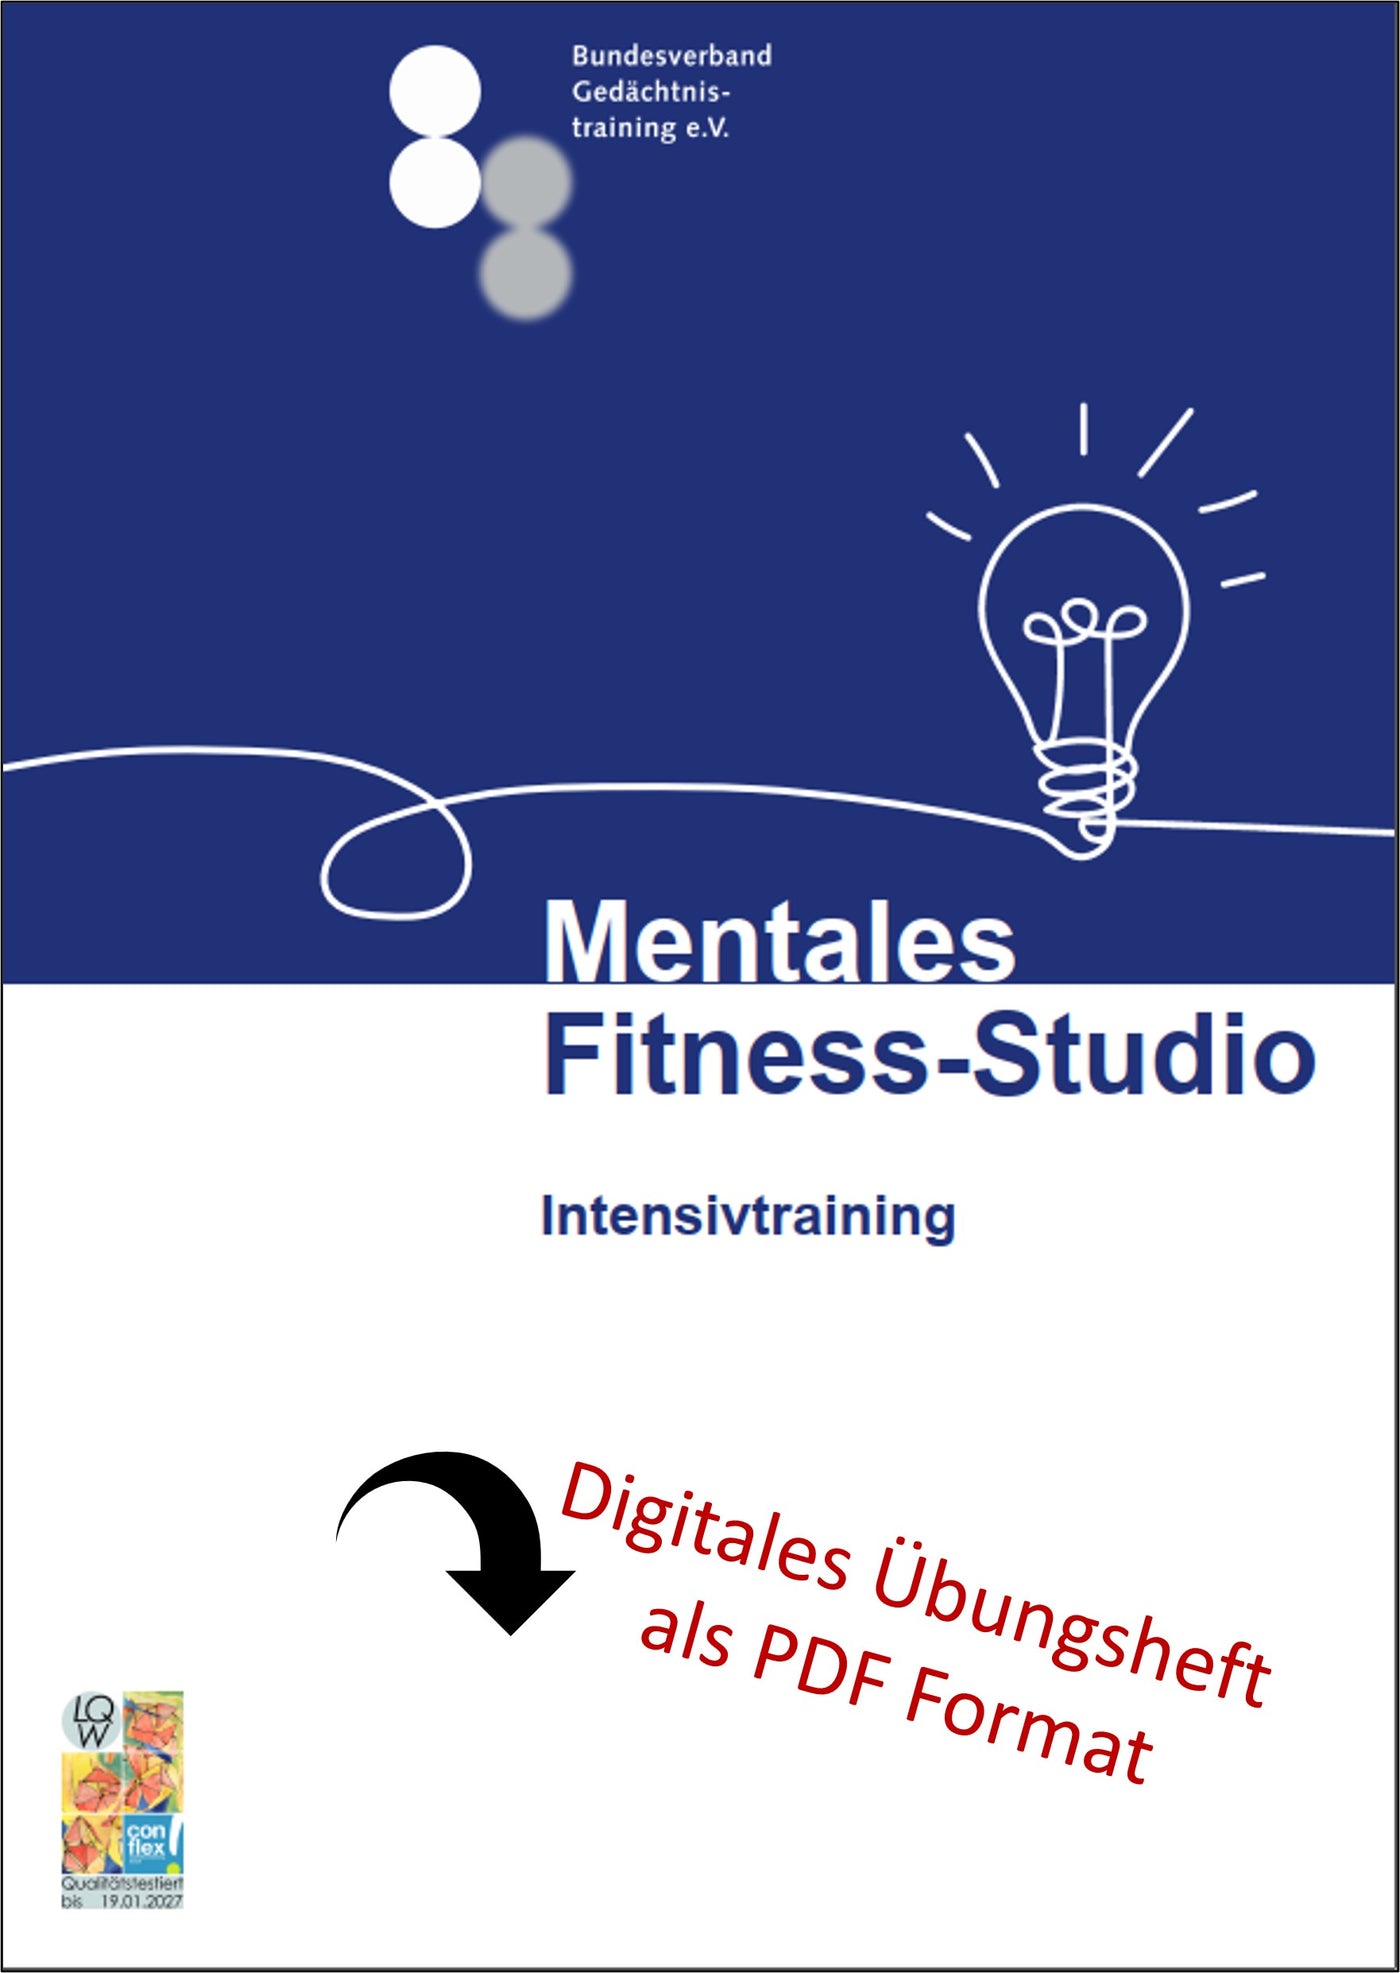 Mentales Fitness-Studio Teil III - Intensivtraining (Übungsheft als PDF Format)